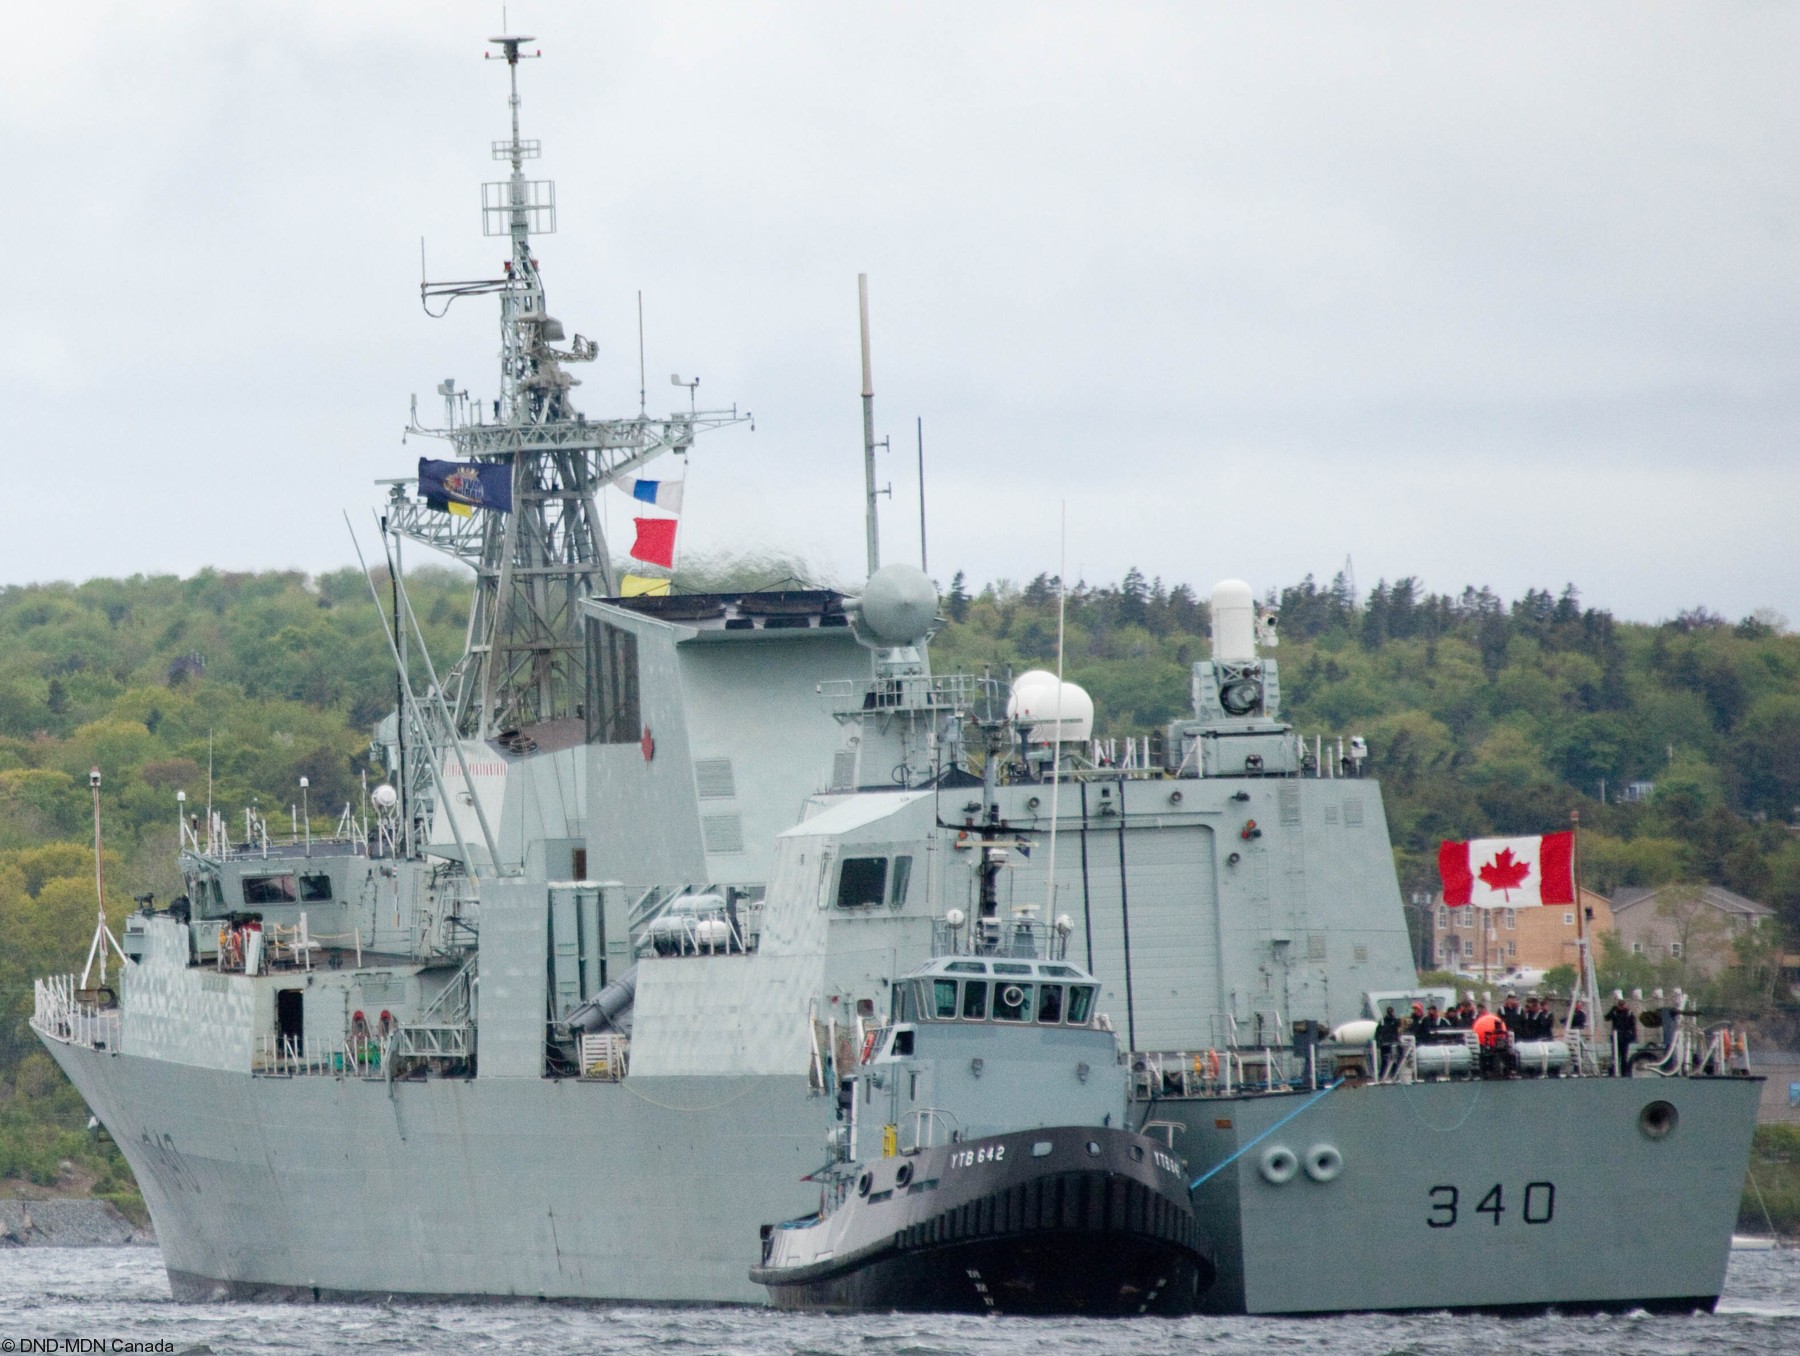 ffh-340 hmcs st. john's halifax class helicopter patrol frigate ncsm royal canadian navy 35